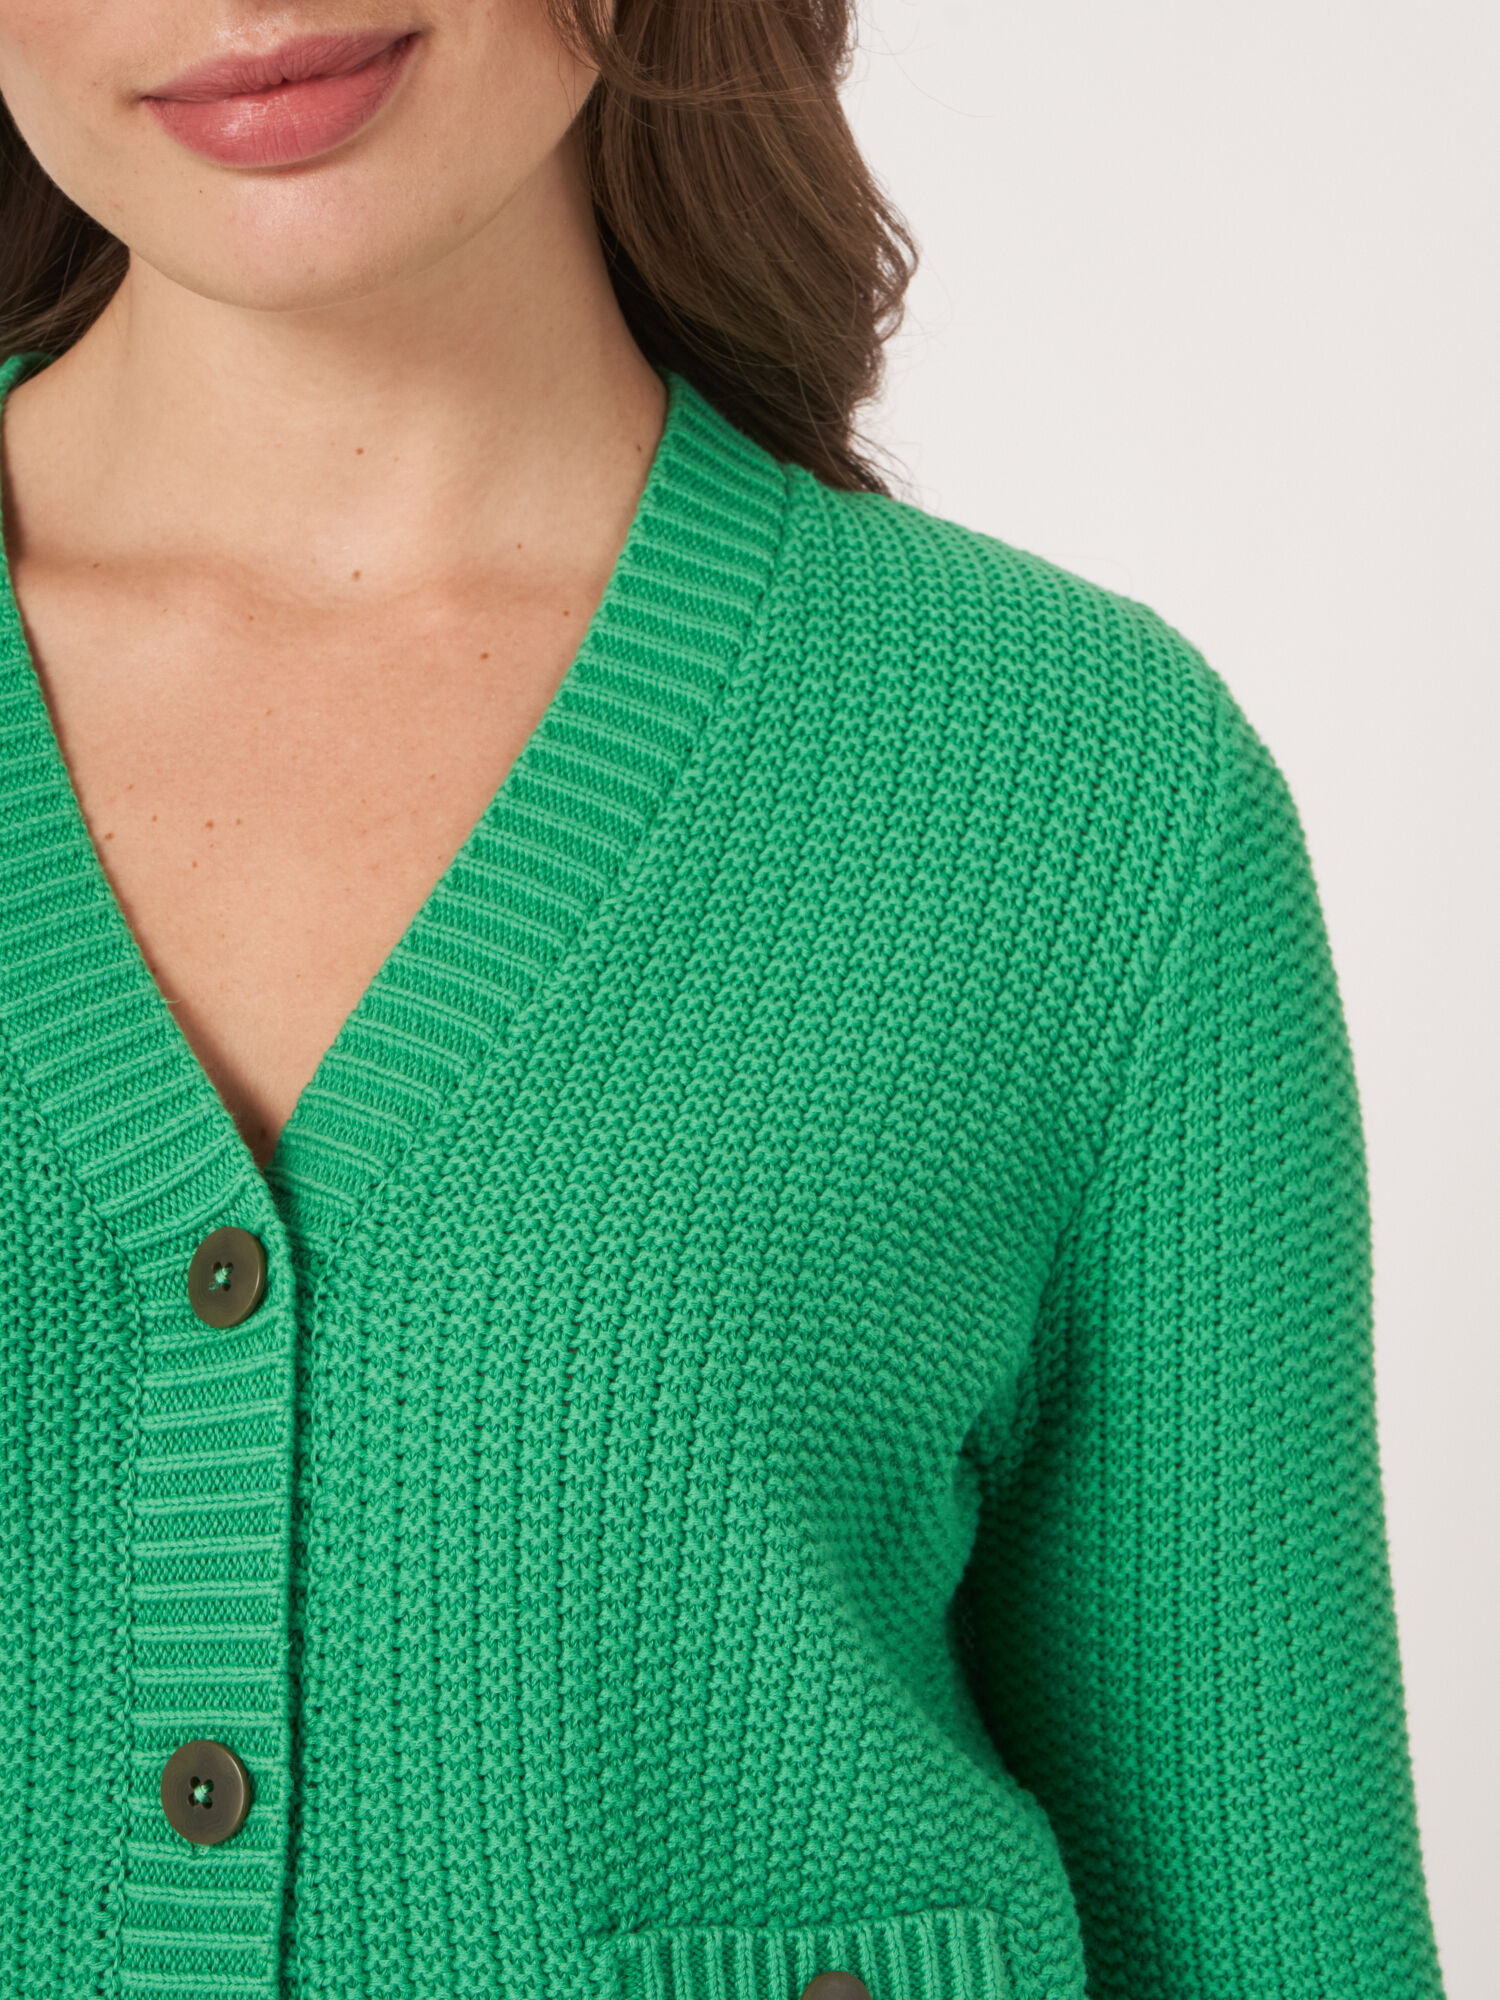 Women's Pure cotton rib knit cardigan | REPEAT cashmere